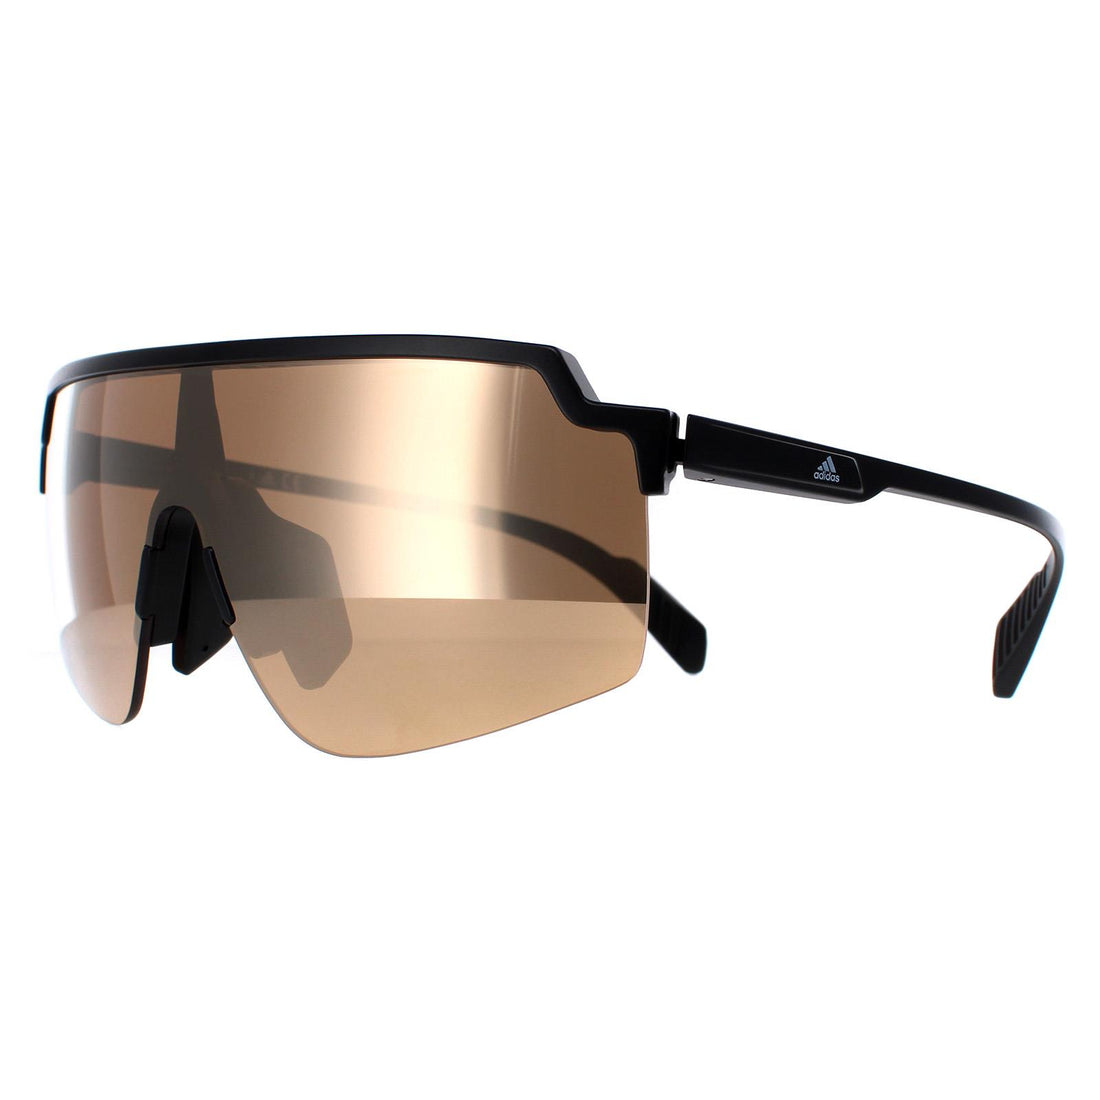 Adidas Sunglasses SP0018 01G Shiny Black Contrast Mirror Gold